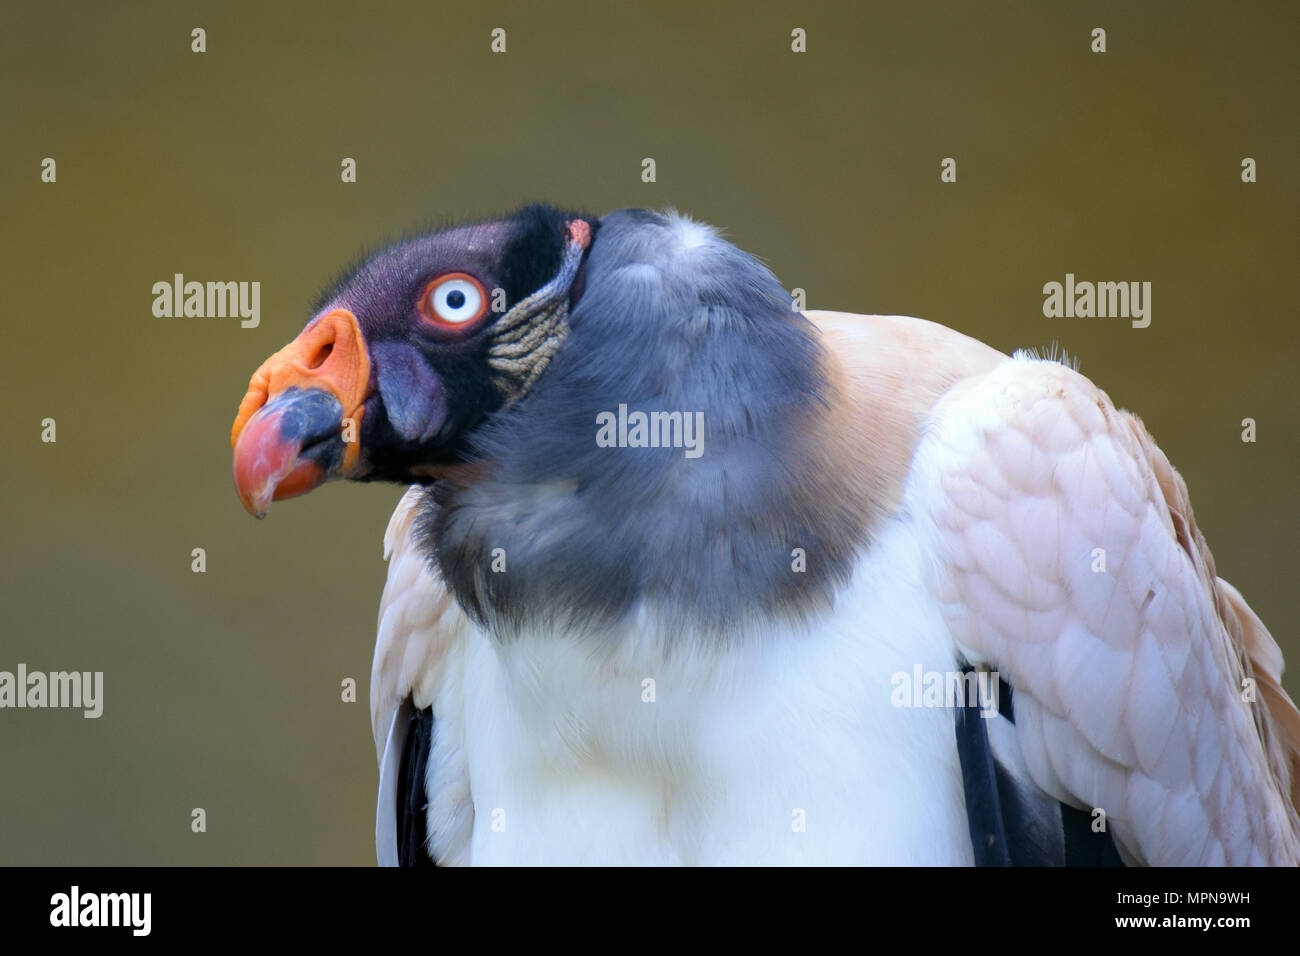 King vulture (Sarcoramphus papa) close up. Stock Photo